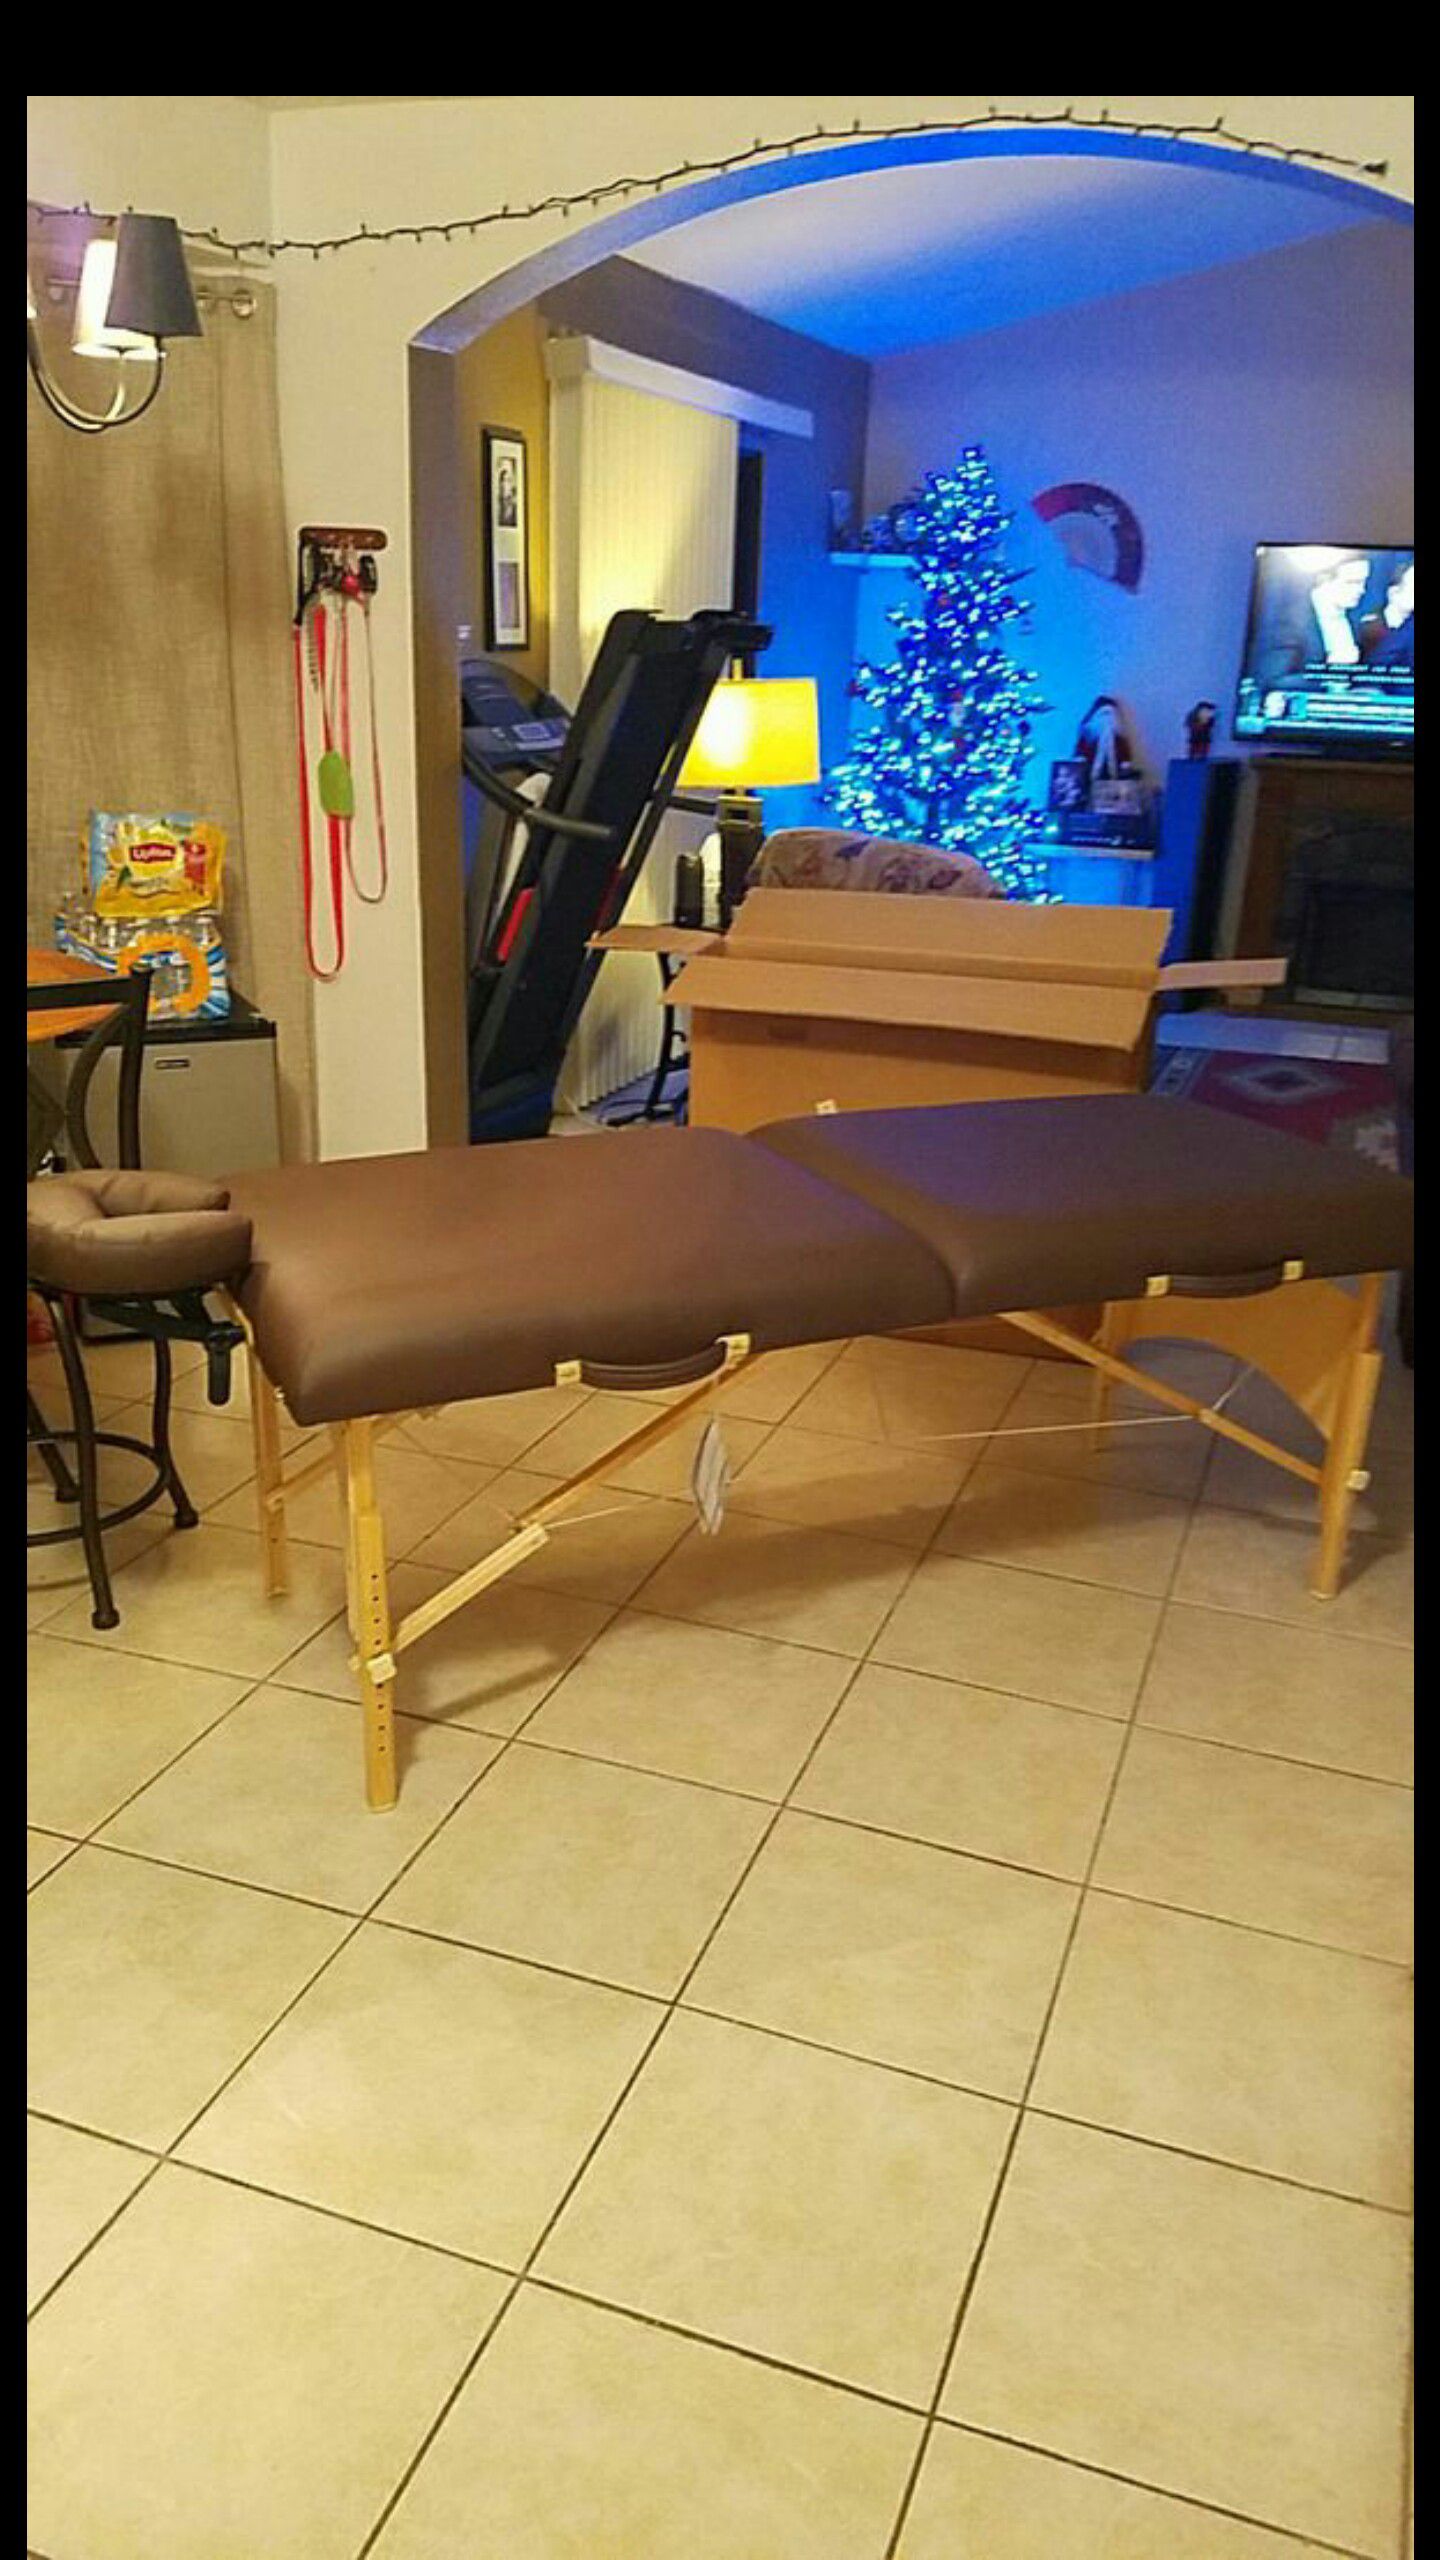 Earth Lite massage table